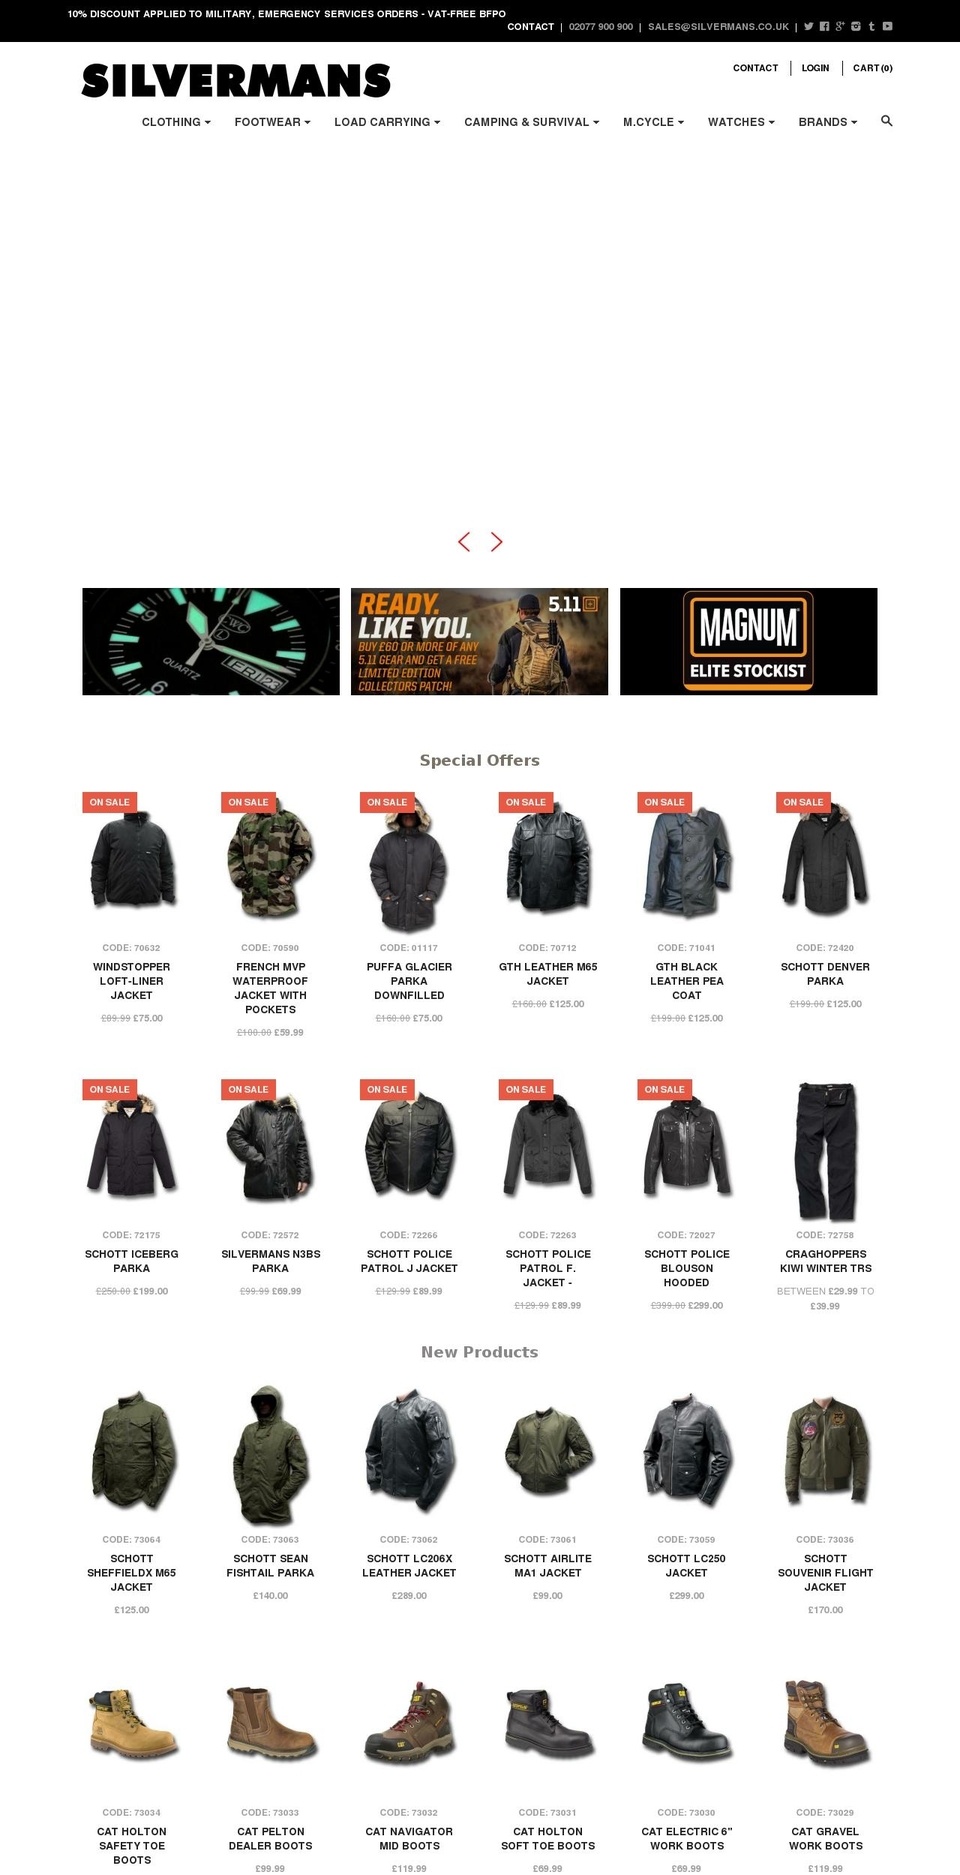 silvermans.co.uk shopify website screenshot